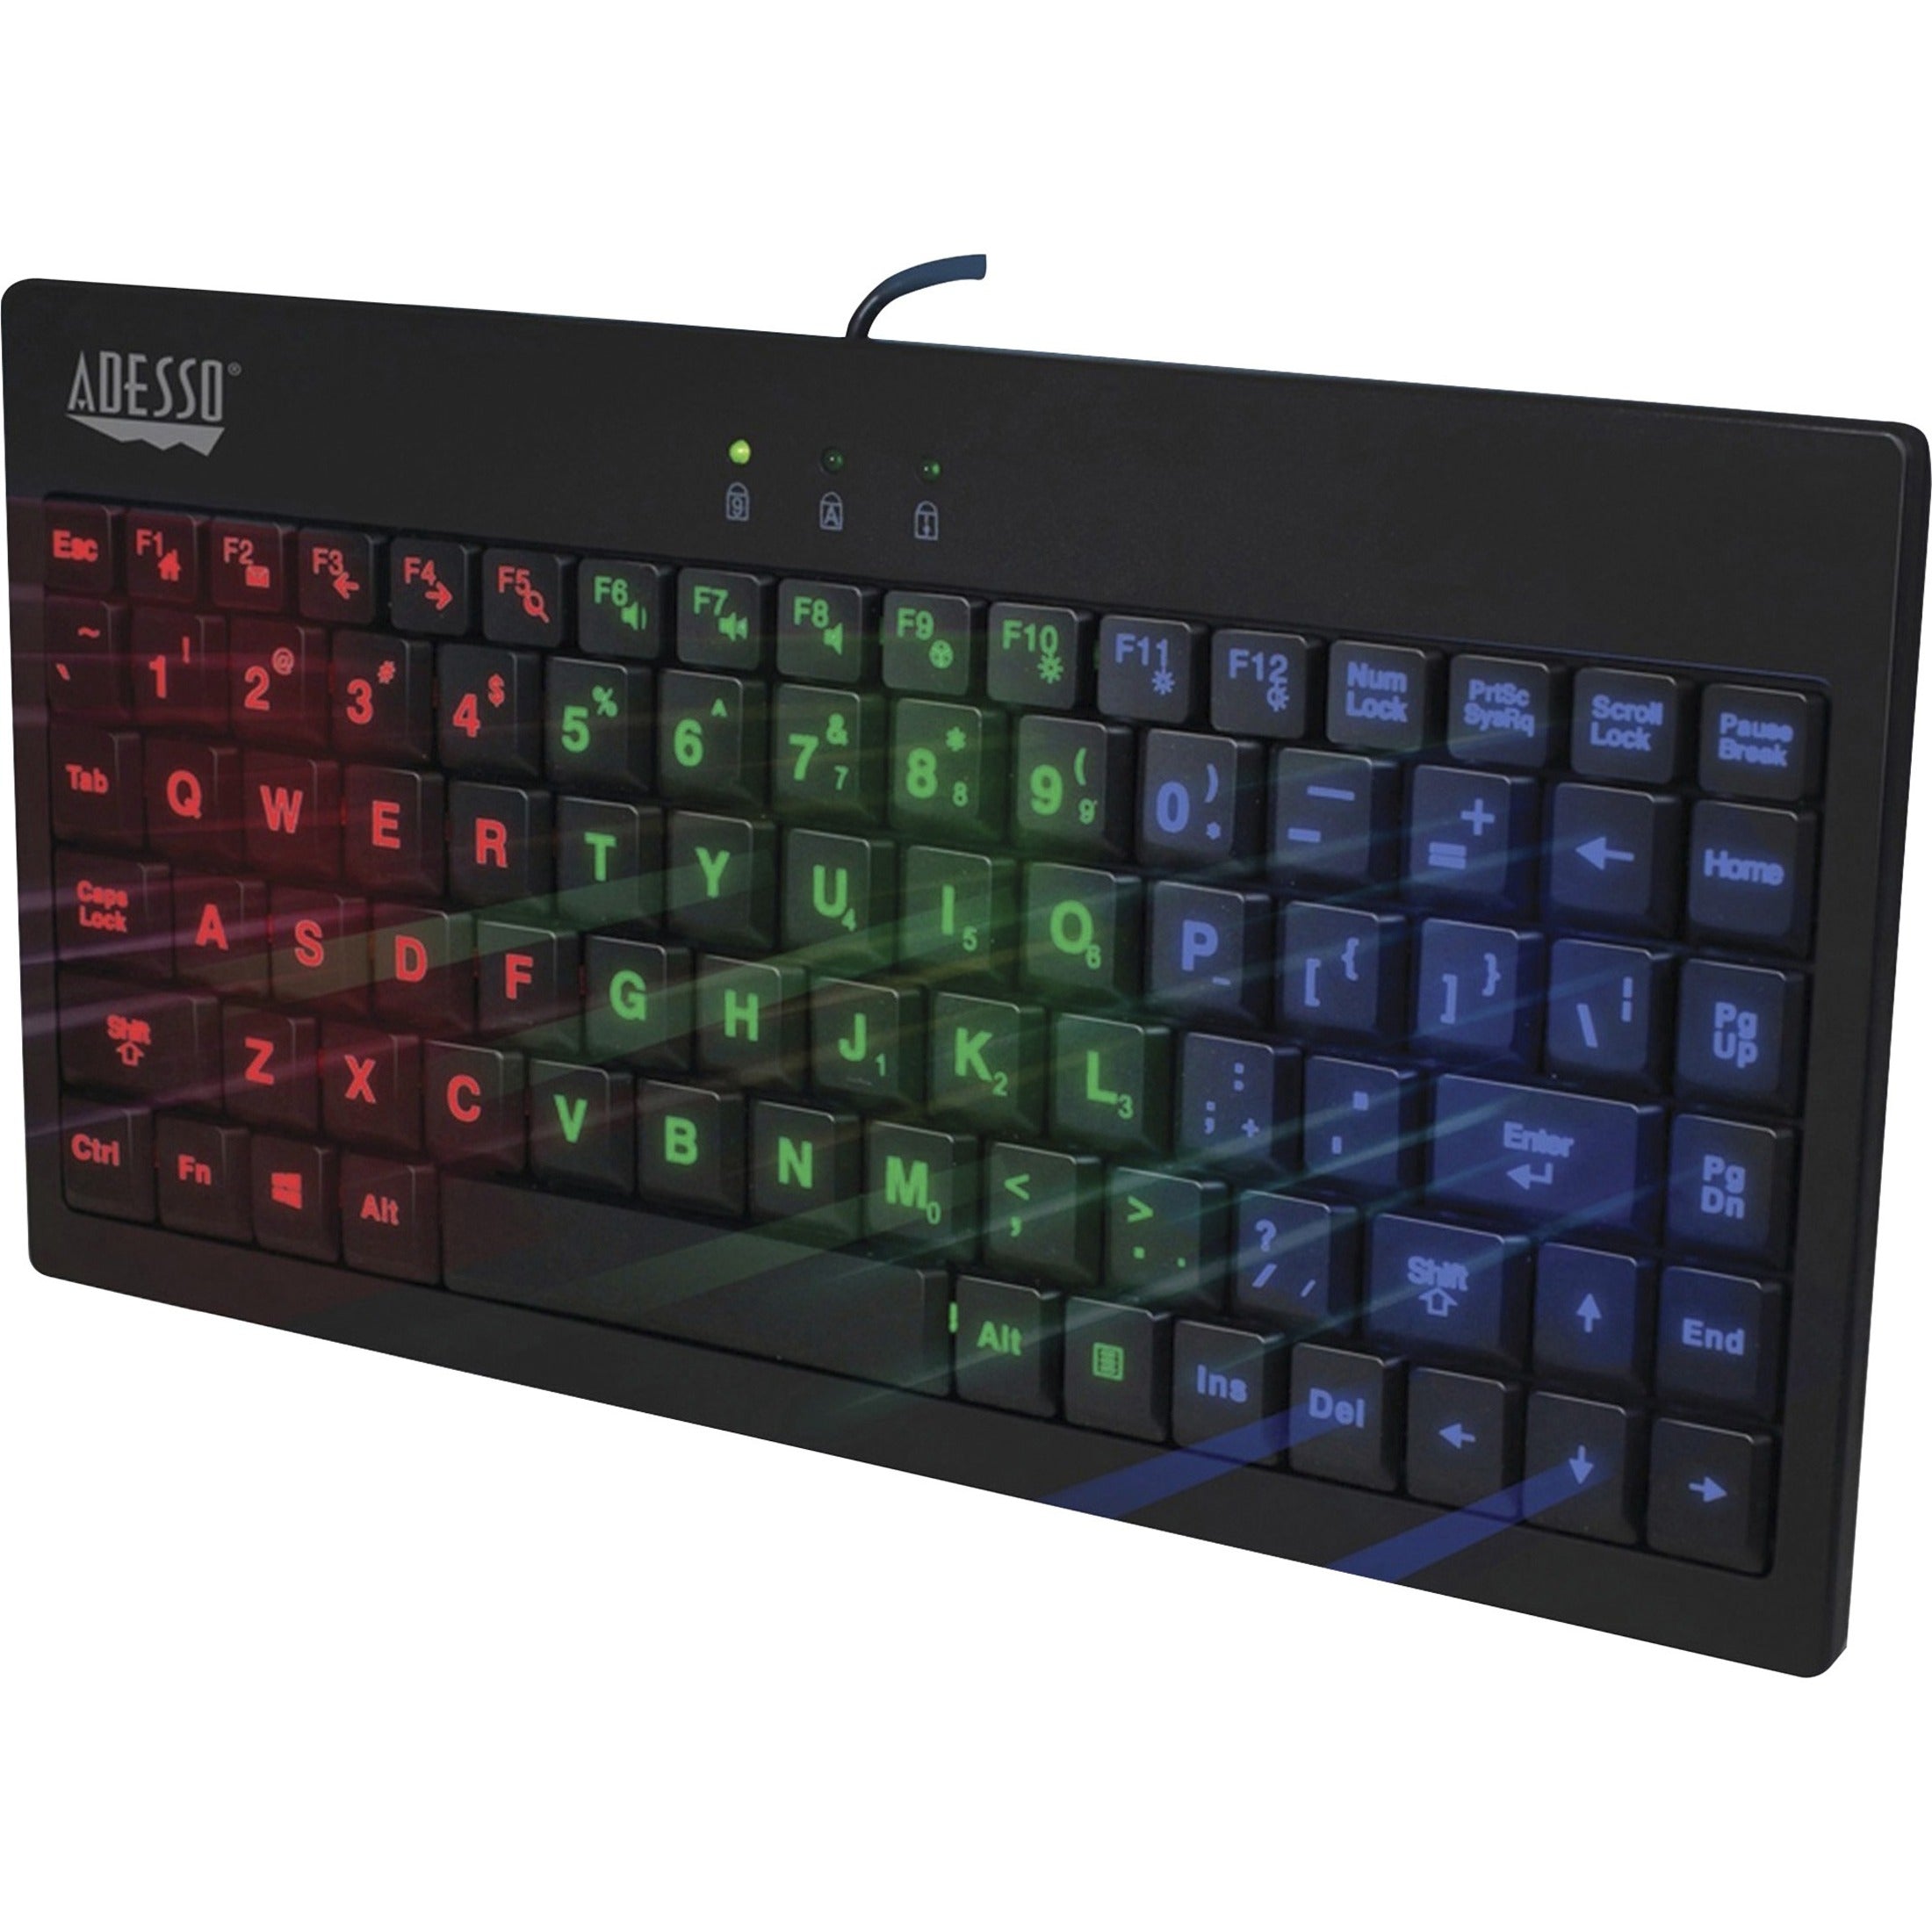 Adesso AKB-110EB 3-Color Illuminated Mini Keyboard, Backlit, Quiet Keys, USB Wired